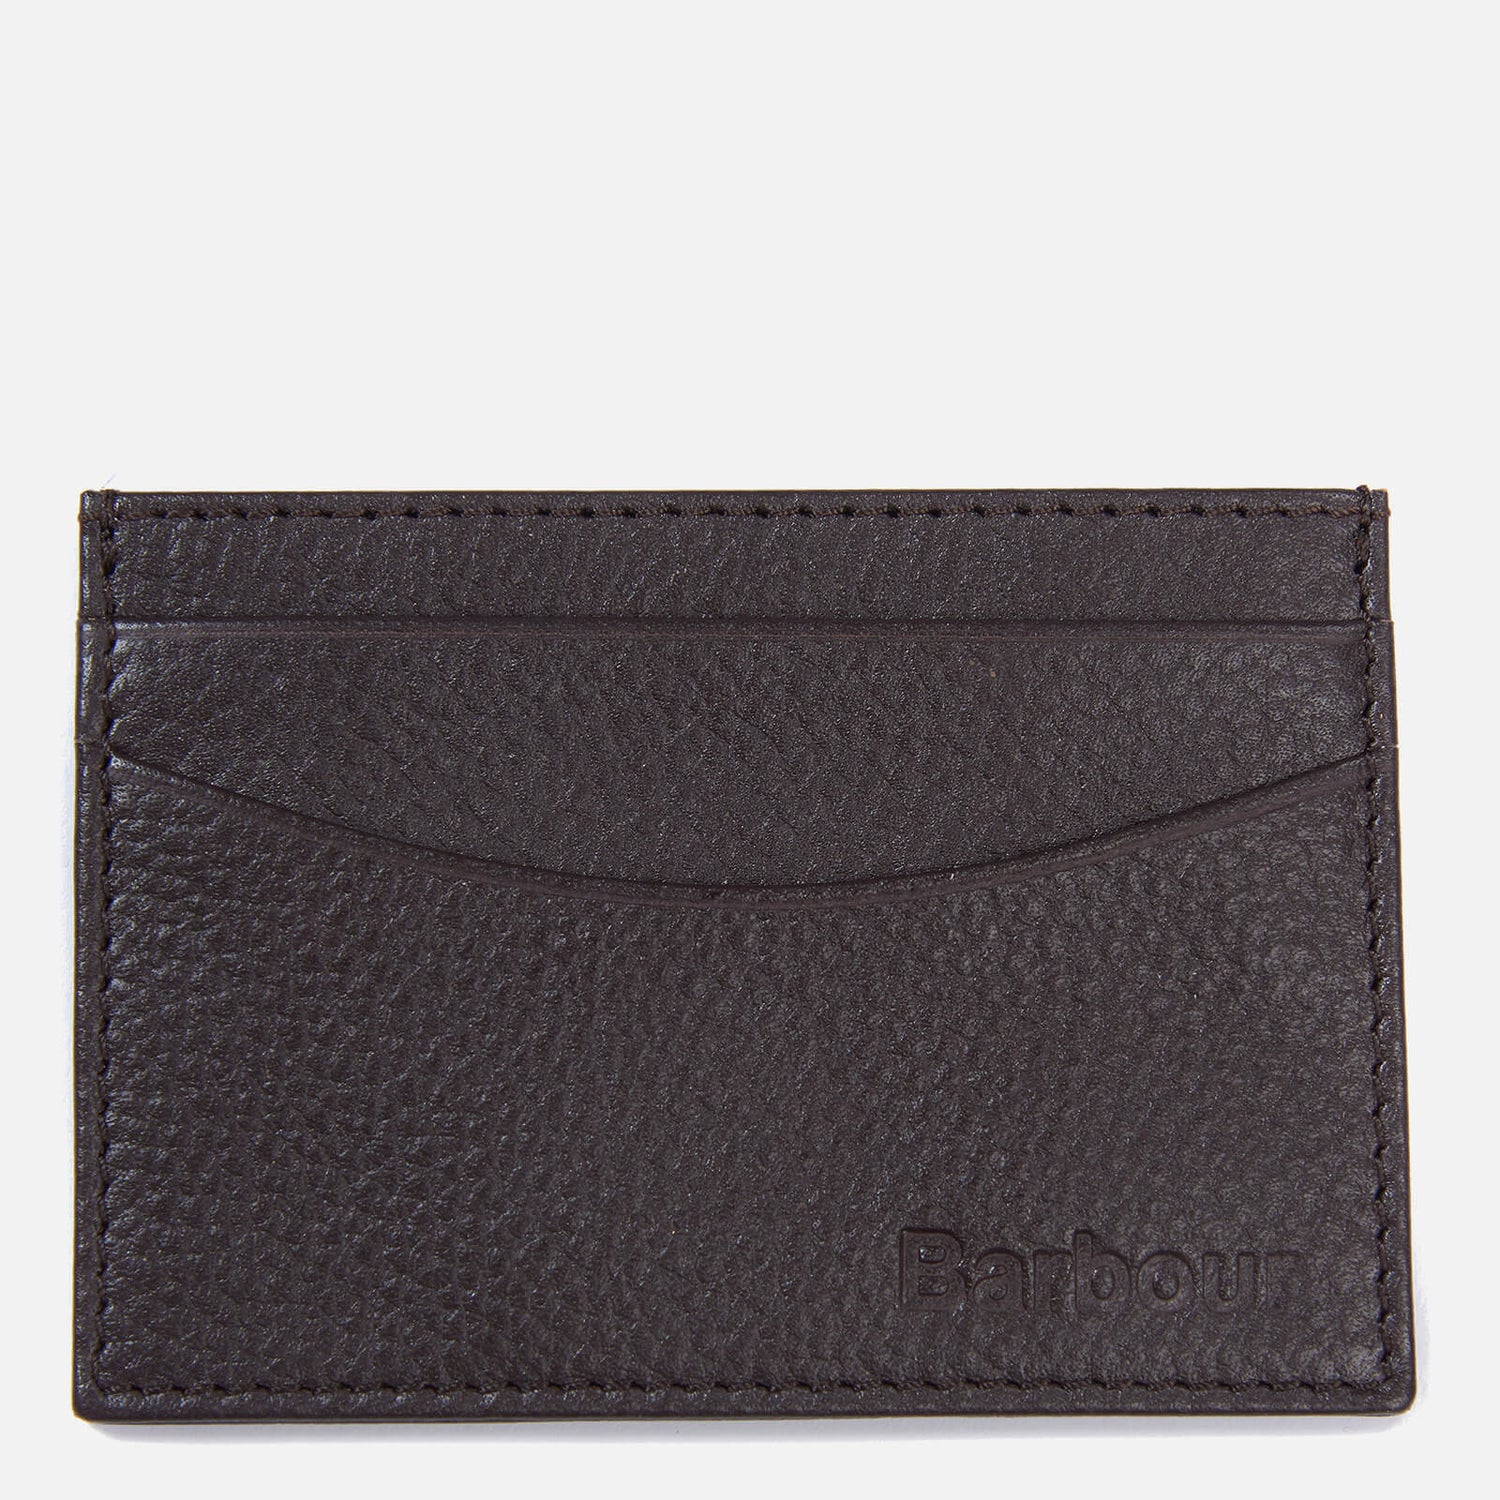 Barbour Heritage Men's Amble Leather Card Holder - Dark Brown